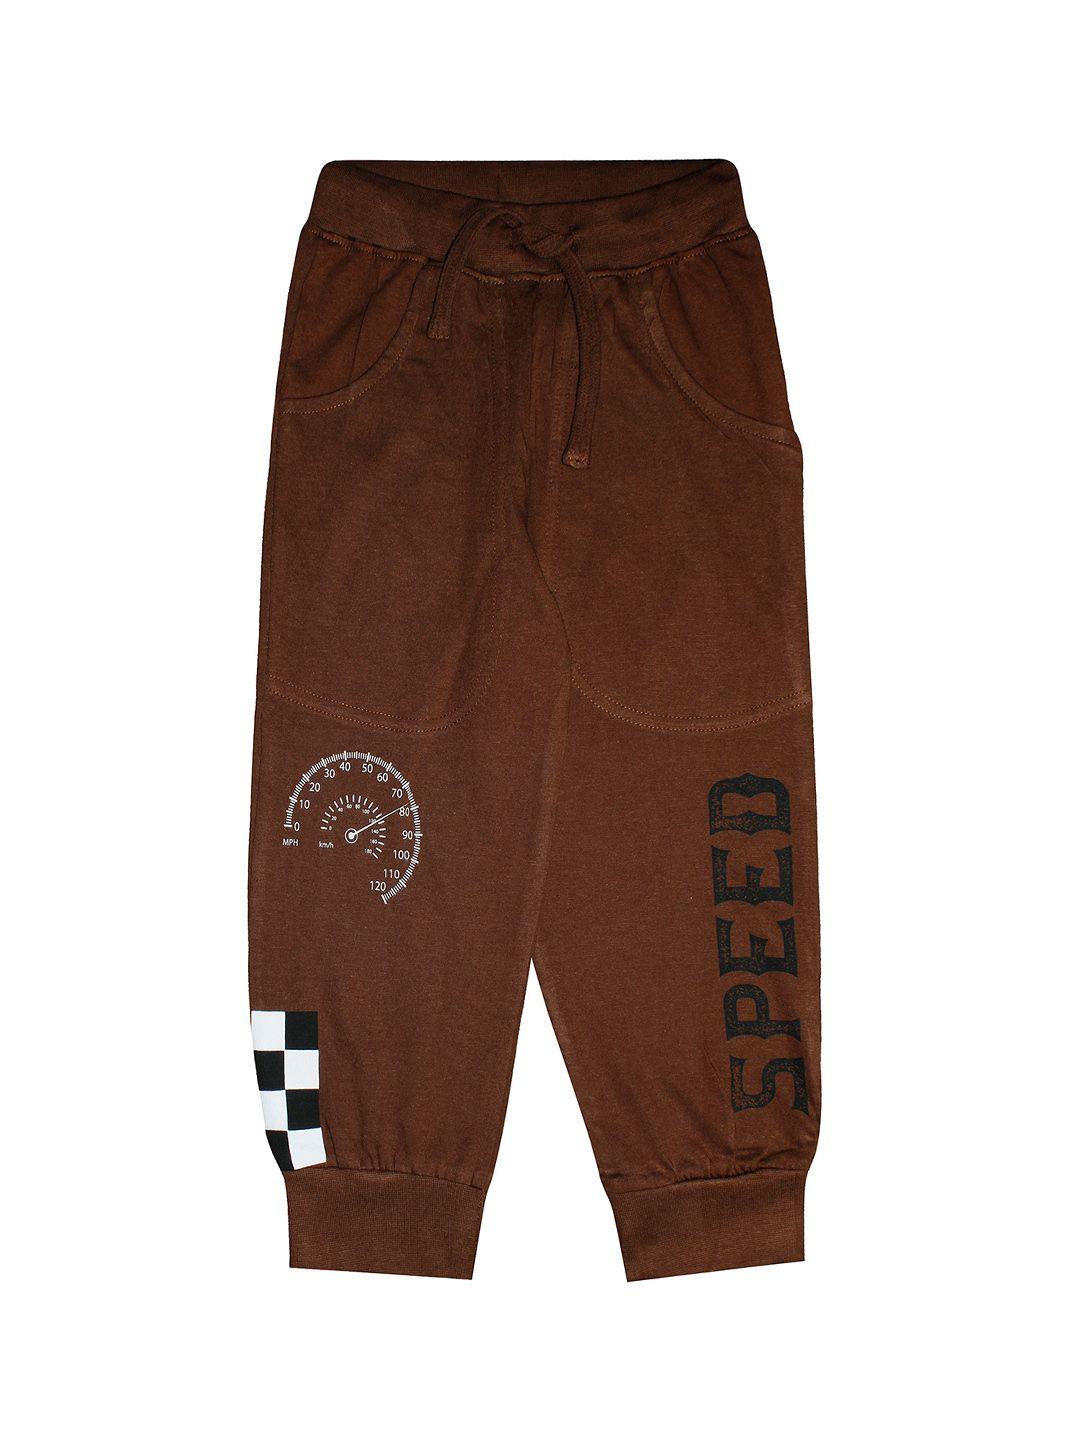 kiddopanti kids coffee brown & black speed printed pure cotton joggers